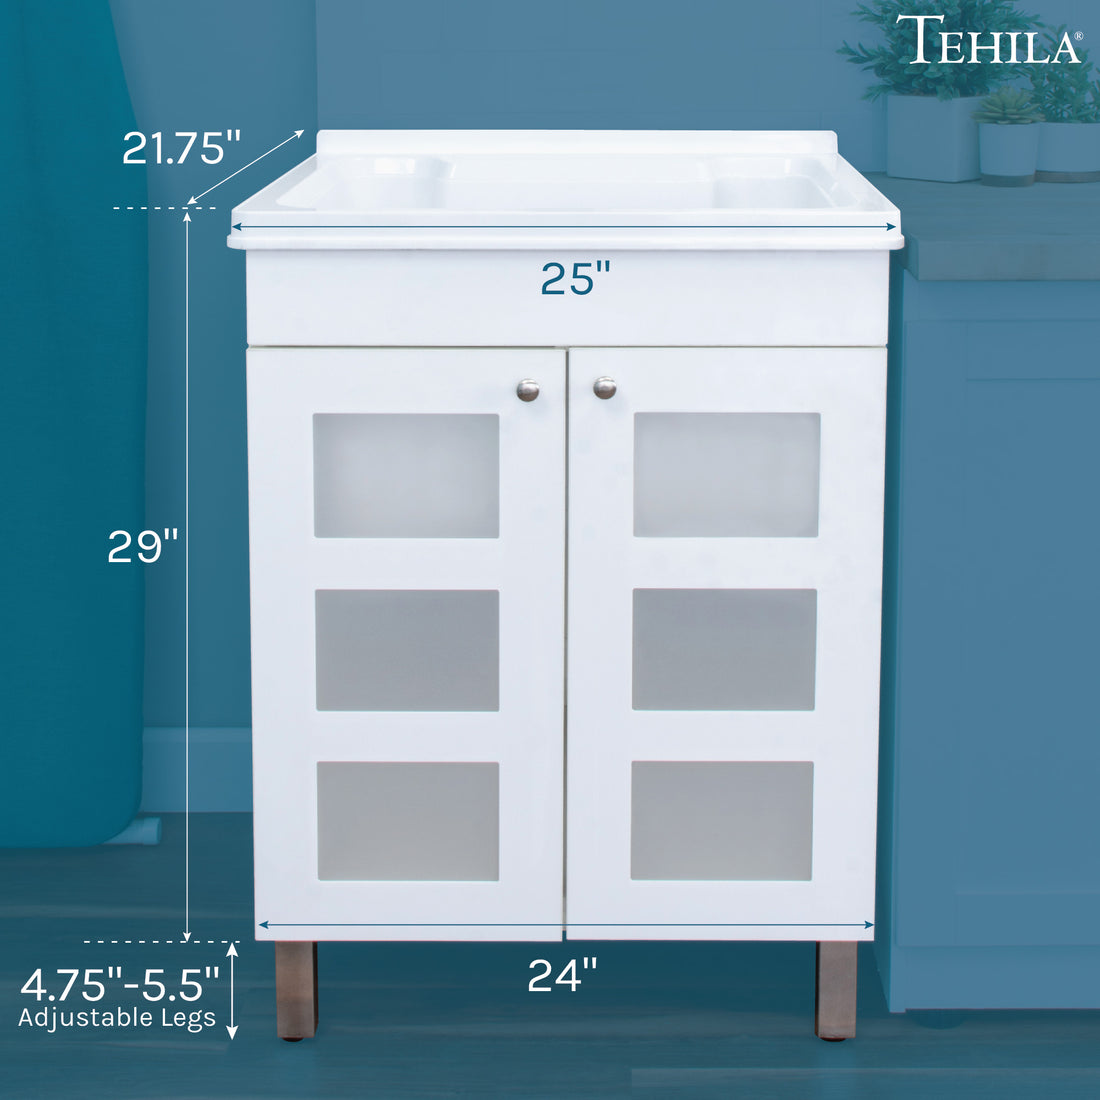 Tehila White Vanity Cabinet Dimensions